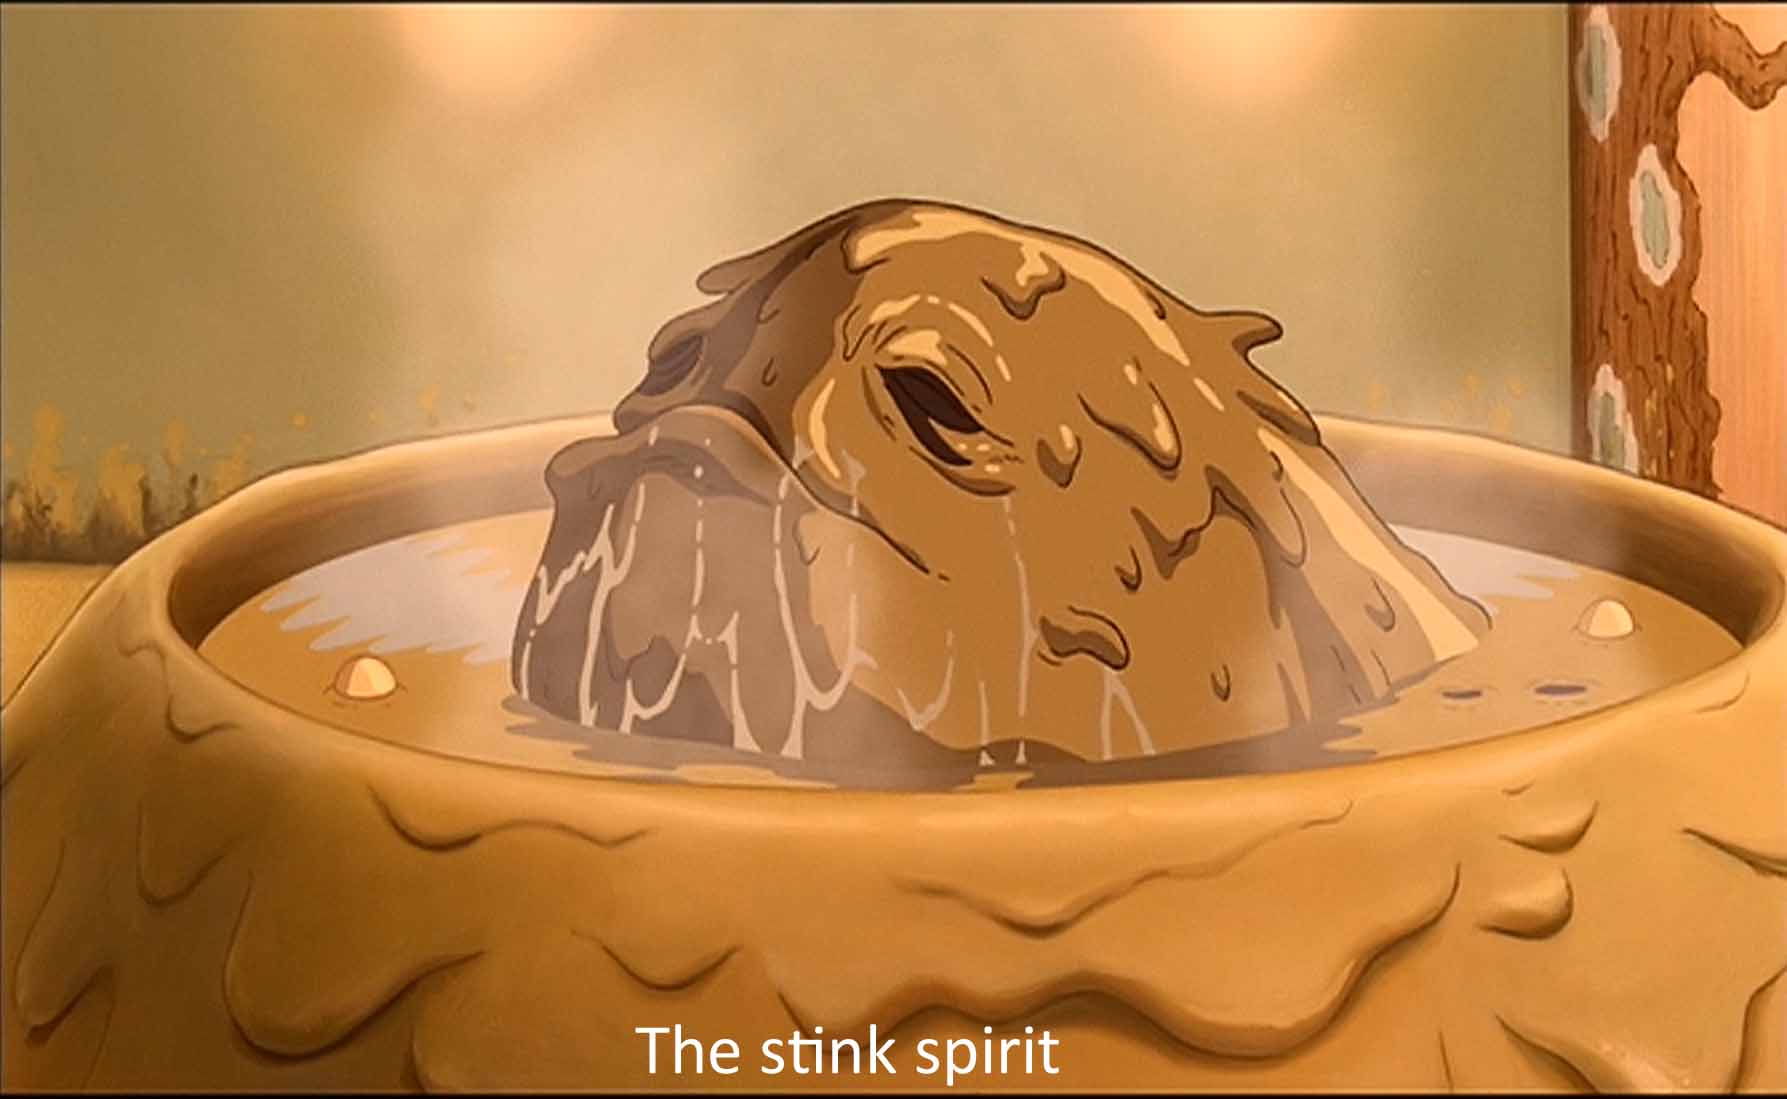 The stink spirit